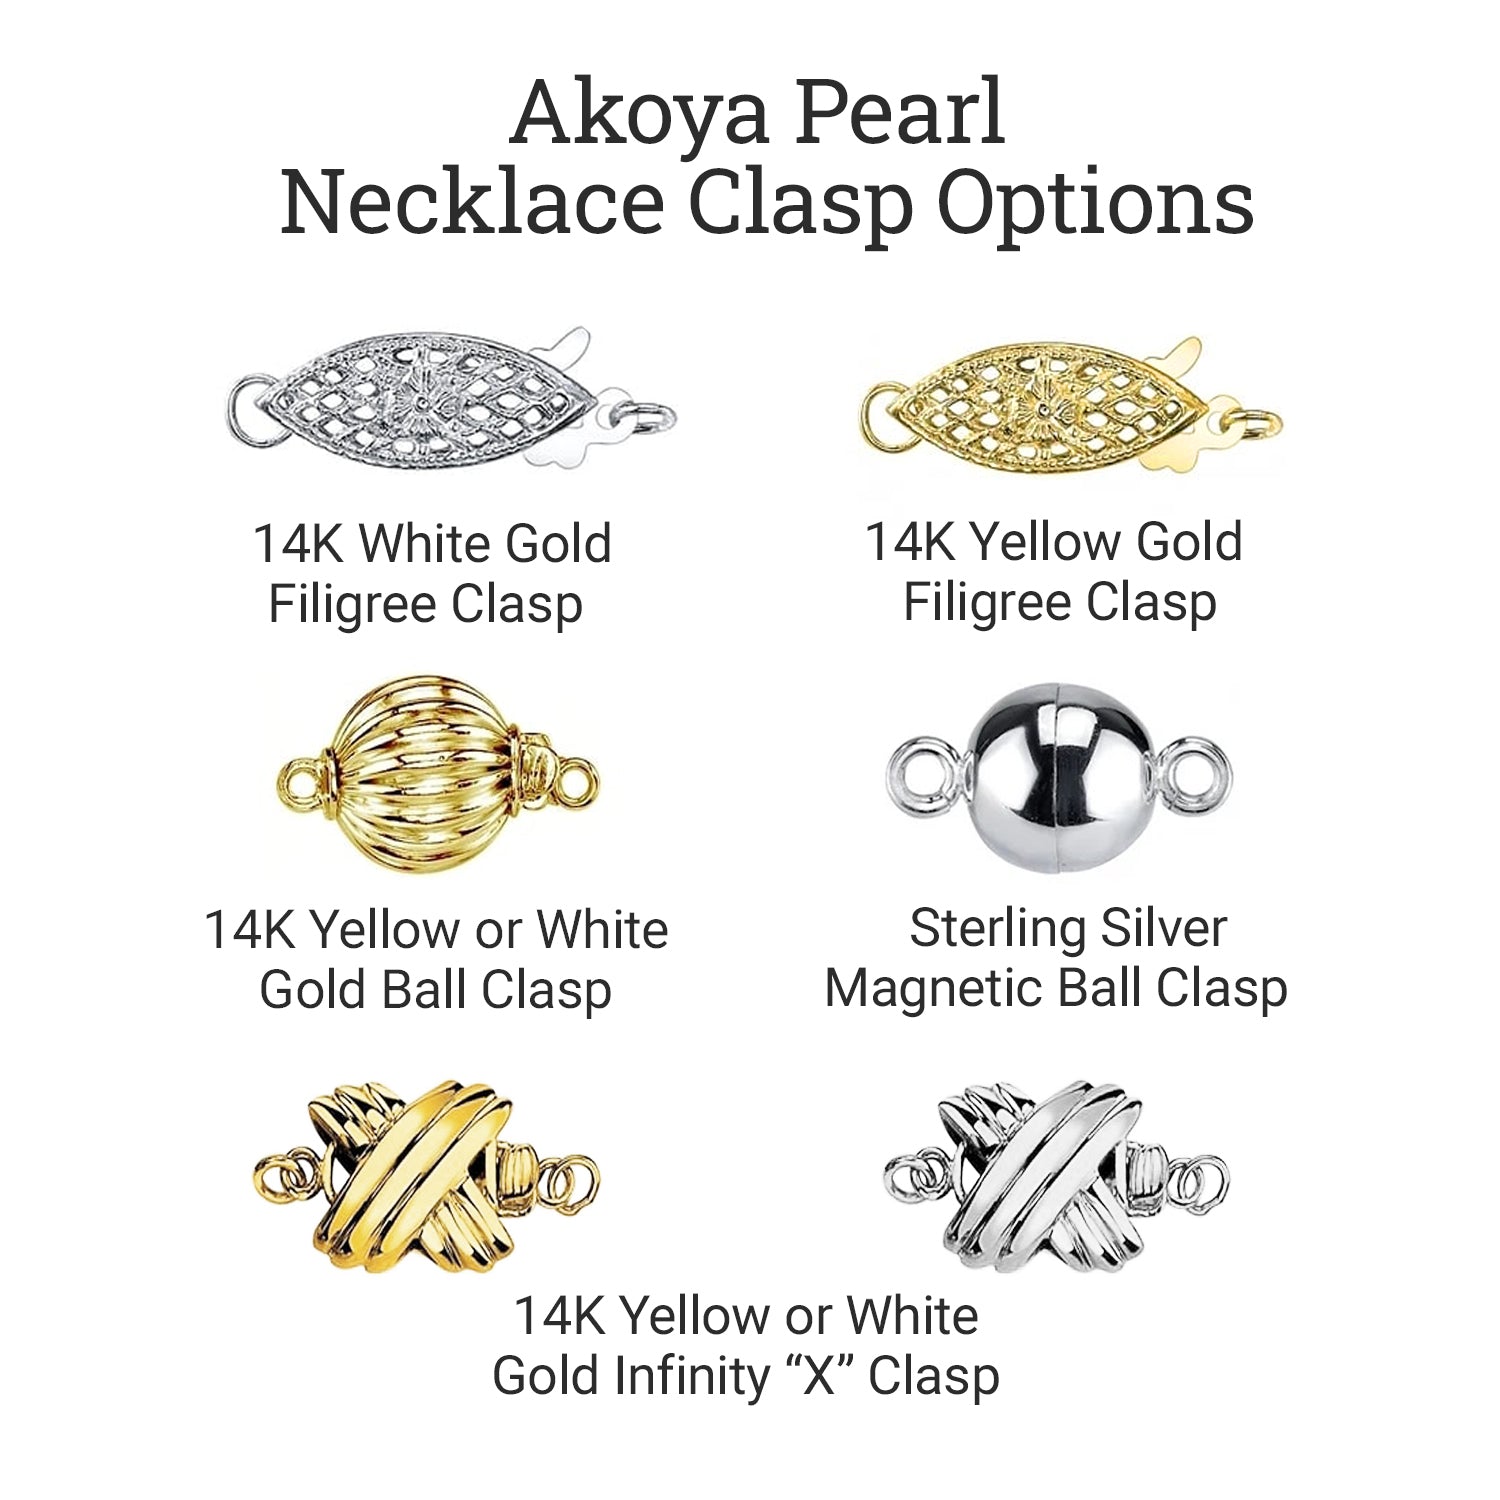 White Japanese Akoya Choker Length Pearl Necklace, 6.5-7.0mm - AA+ Quality